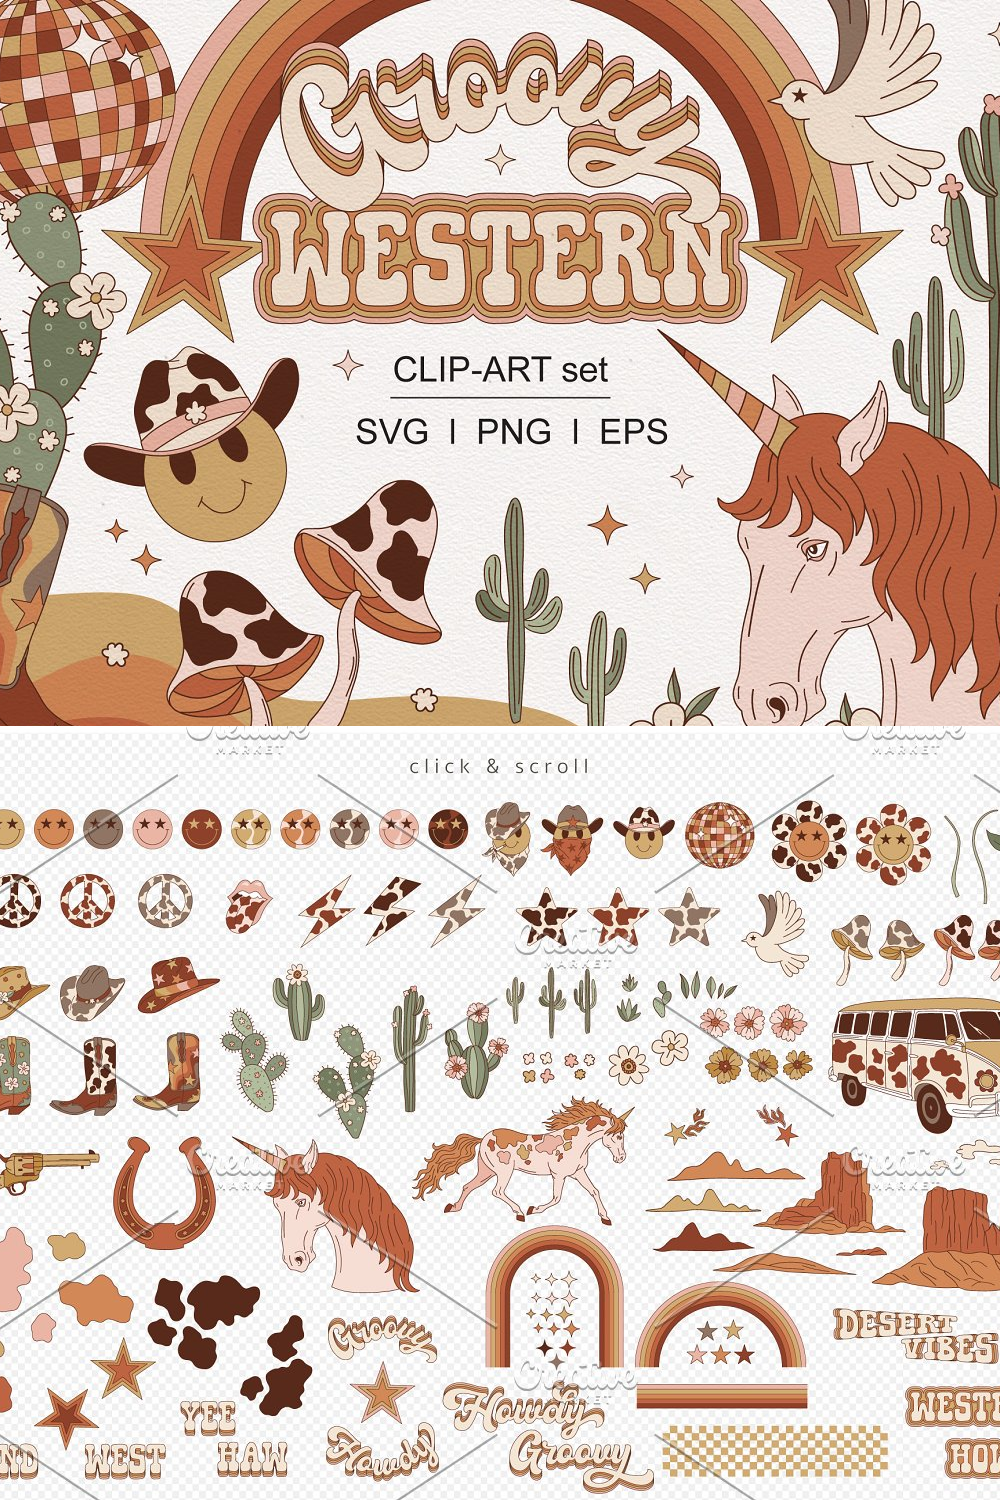 Illustrations retro groovy hippie western desert of pinterest.